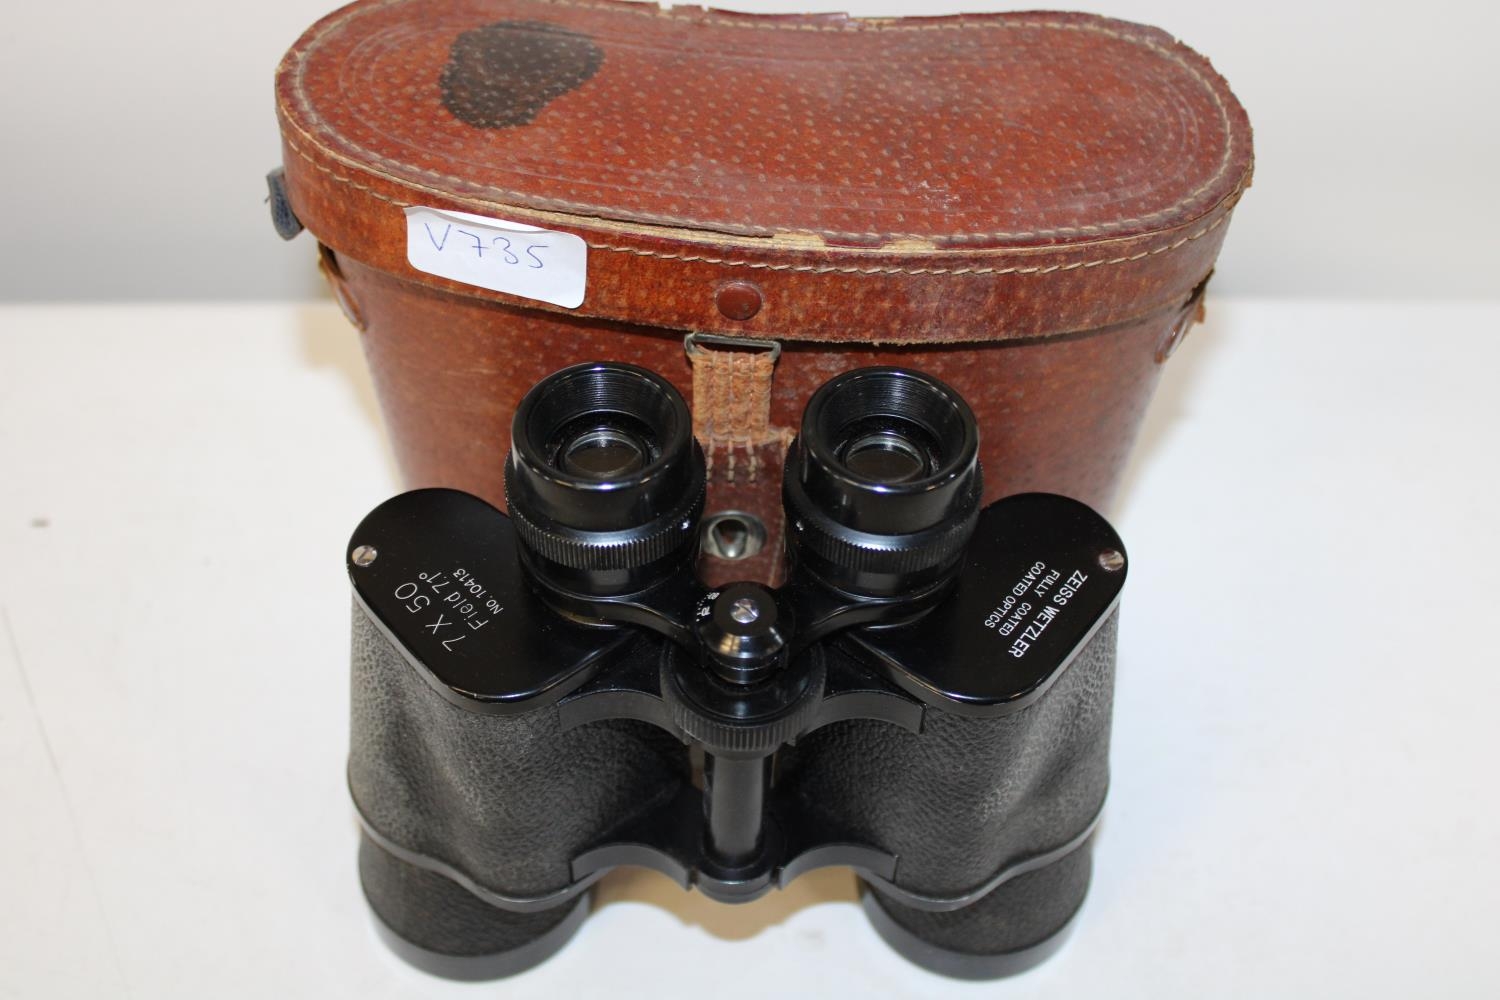 A pair of Zeiss Wetzler 7 x 50 field binoculars